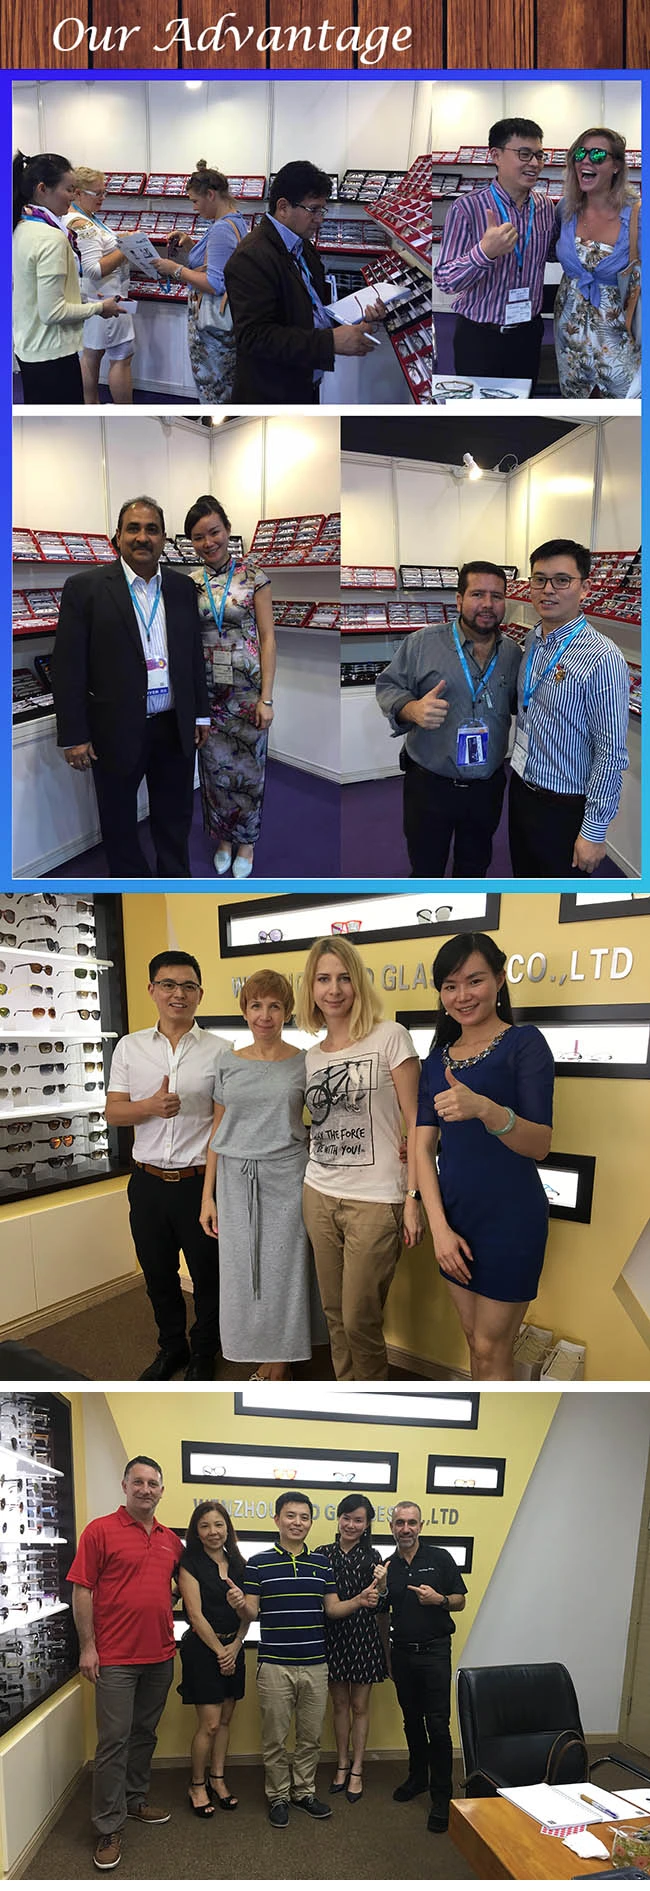 New Pattern Unisex Acetate Polarized Sunglasses China Factory Sell